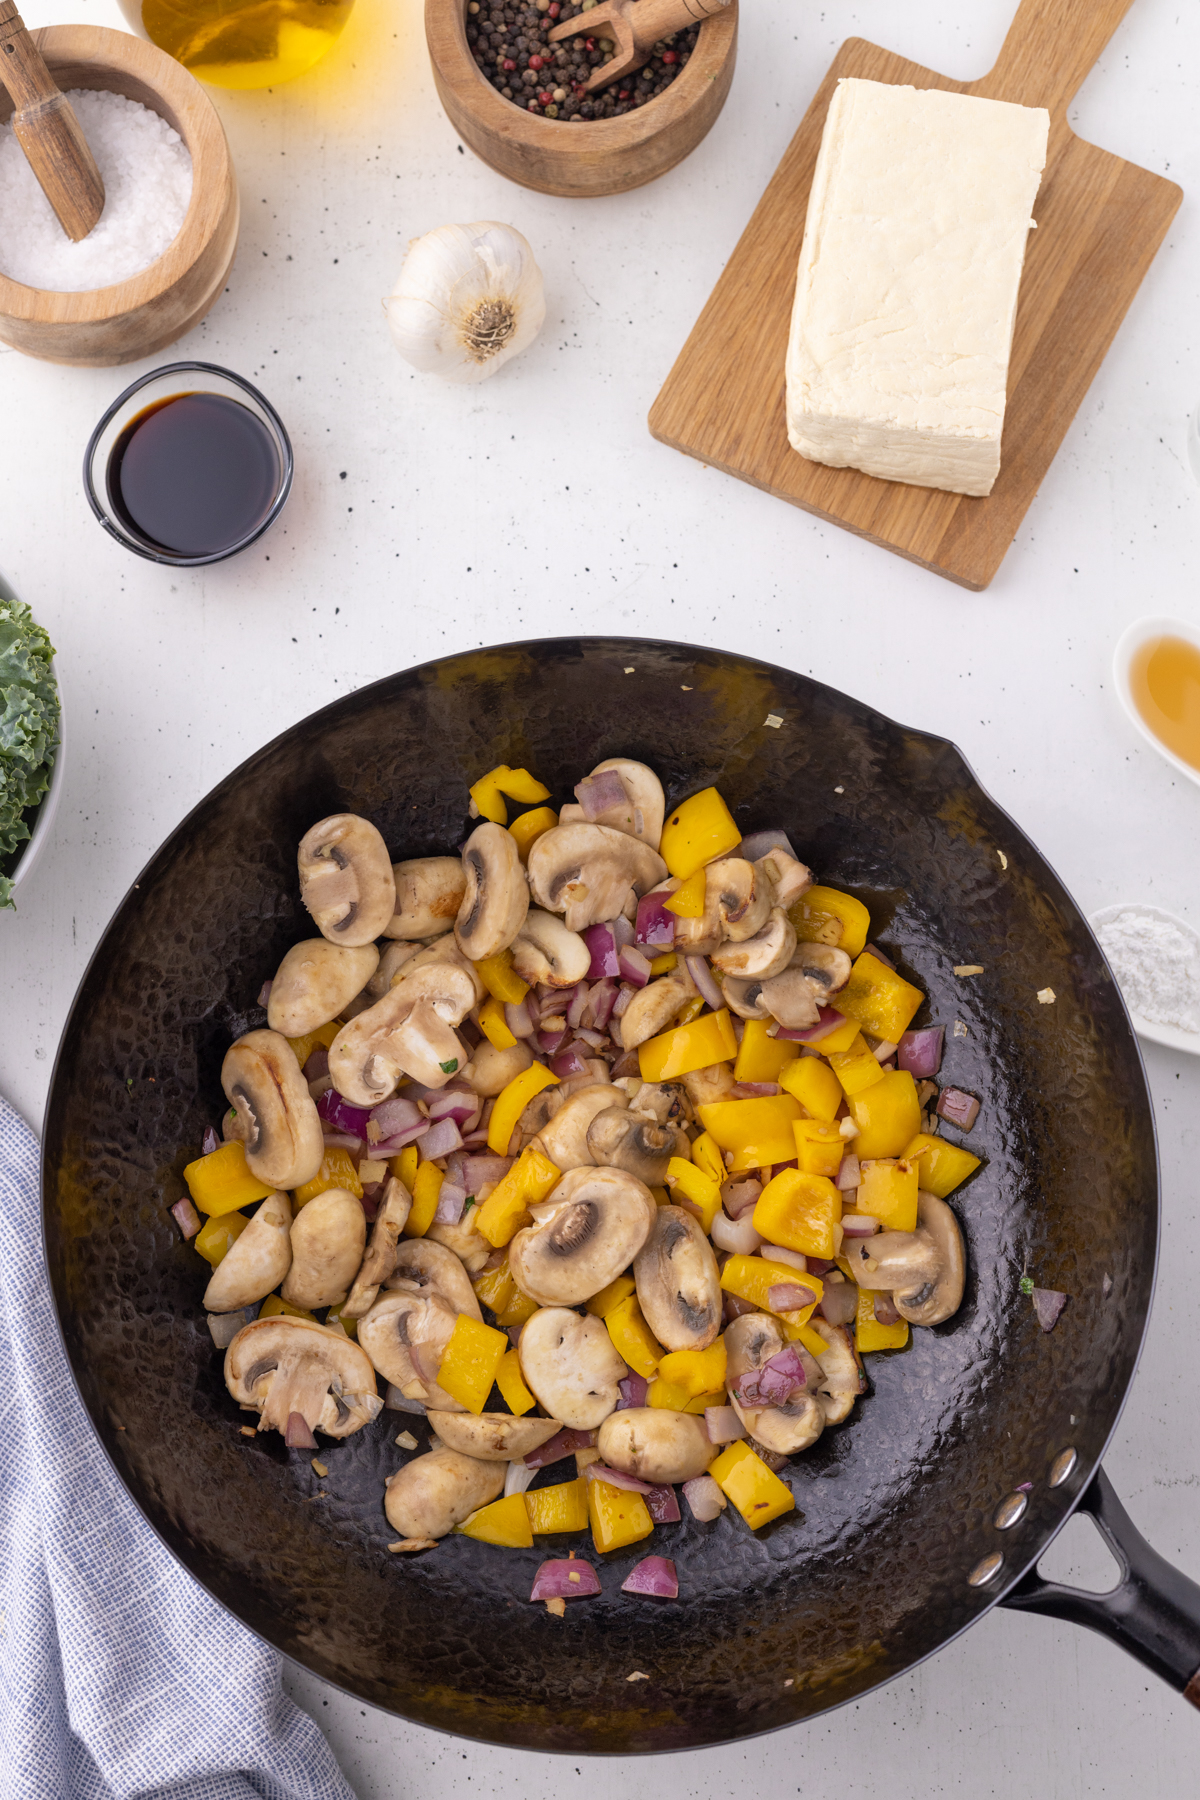 Mushroom, onion and pepper in a wok.